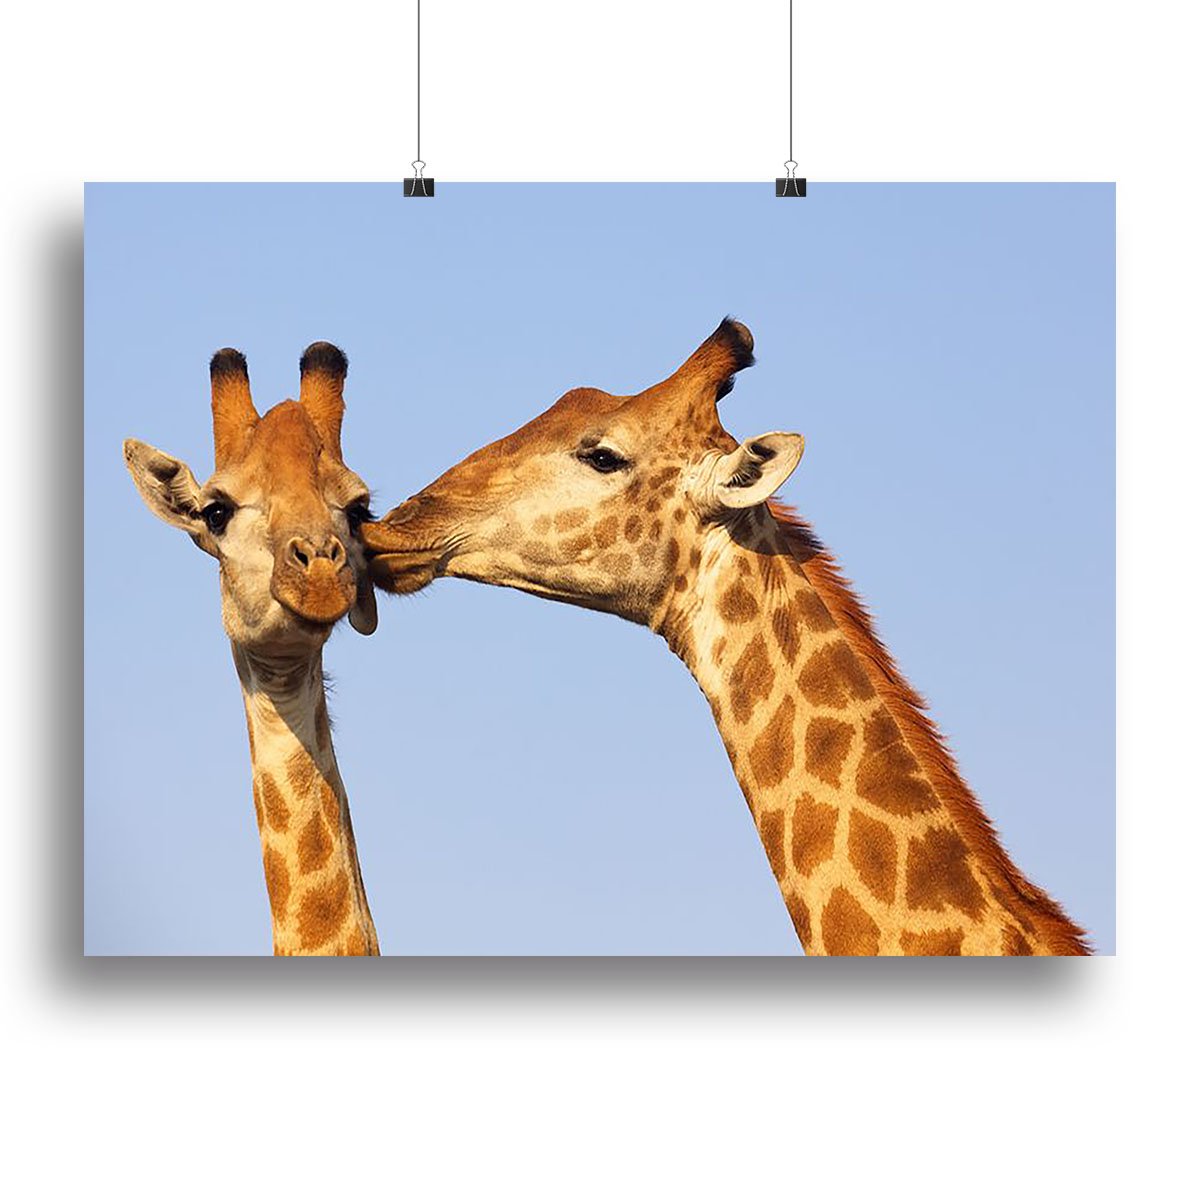 Giraffe pair bonding Canvas Print or Poster